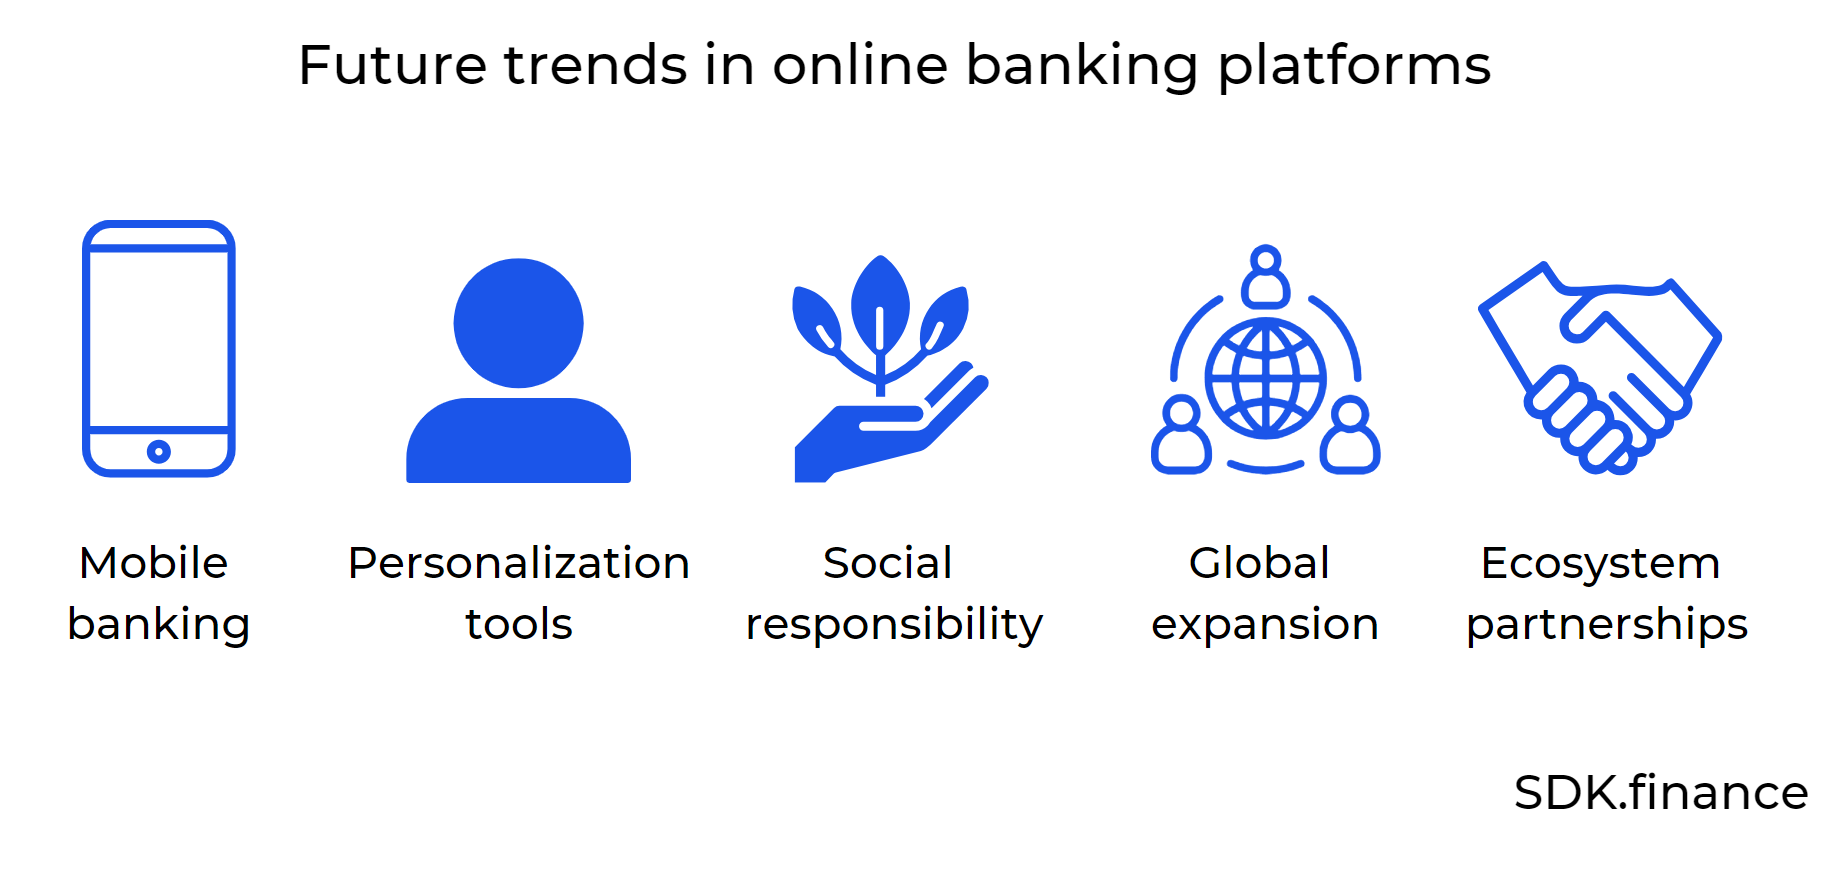 Exploring the Best Online Banking Platforms in 2023